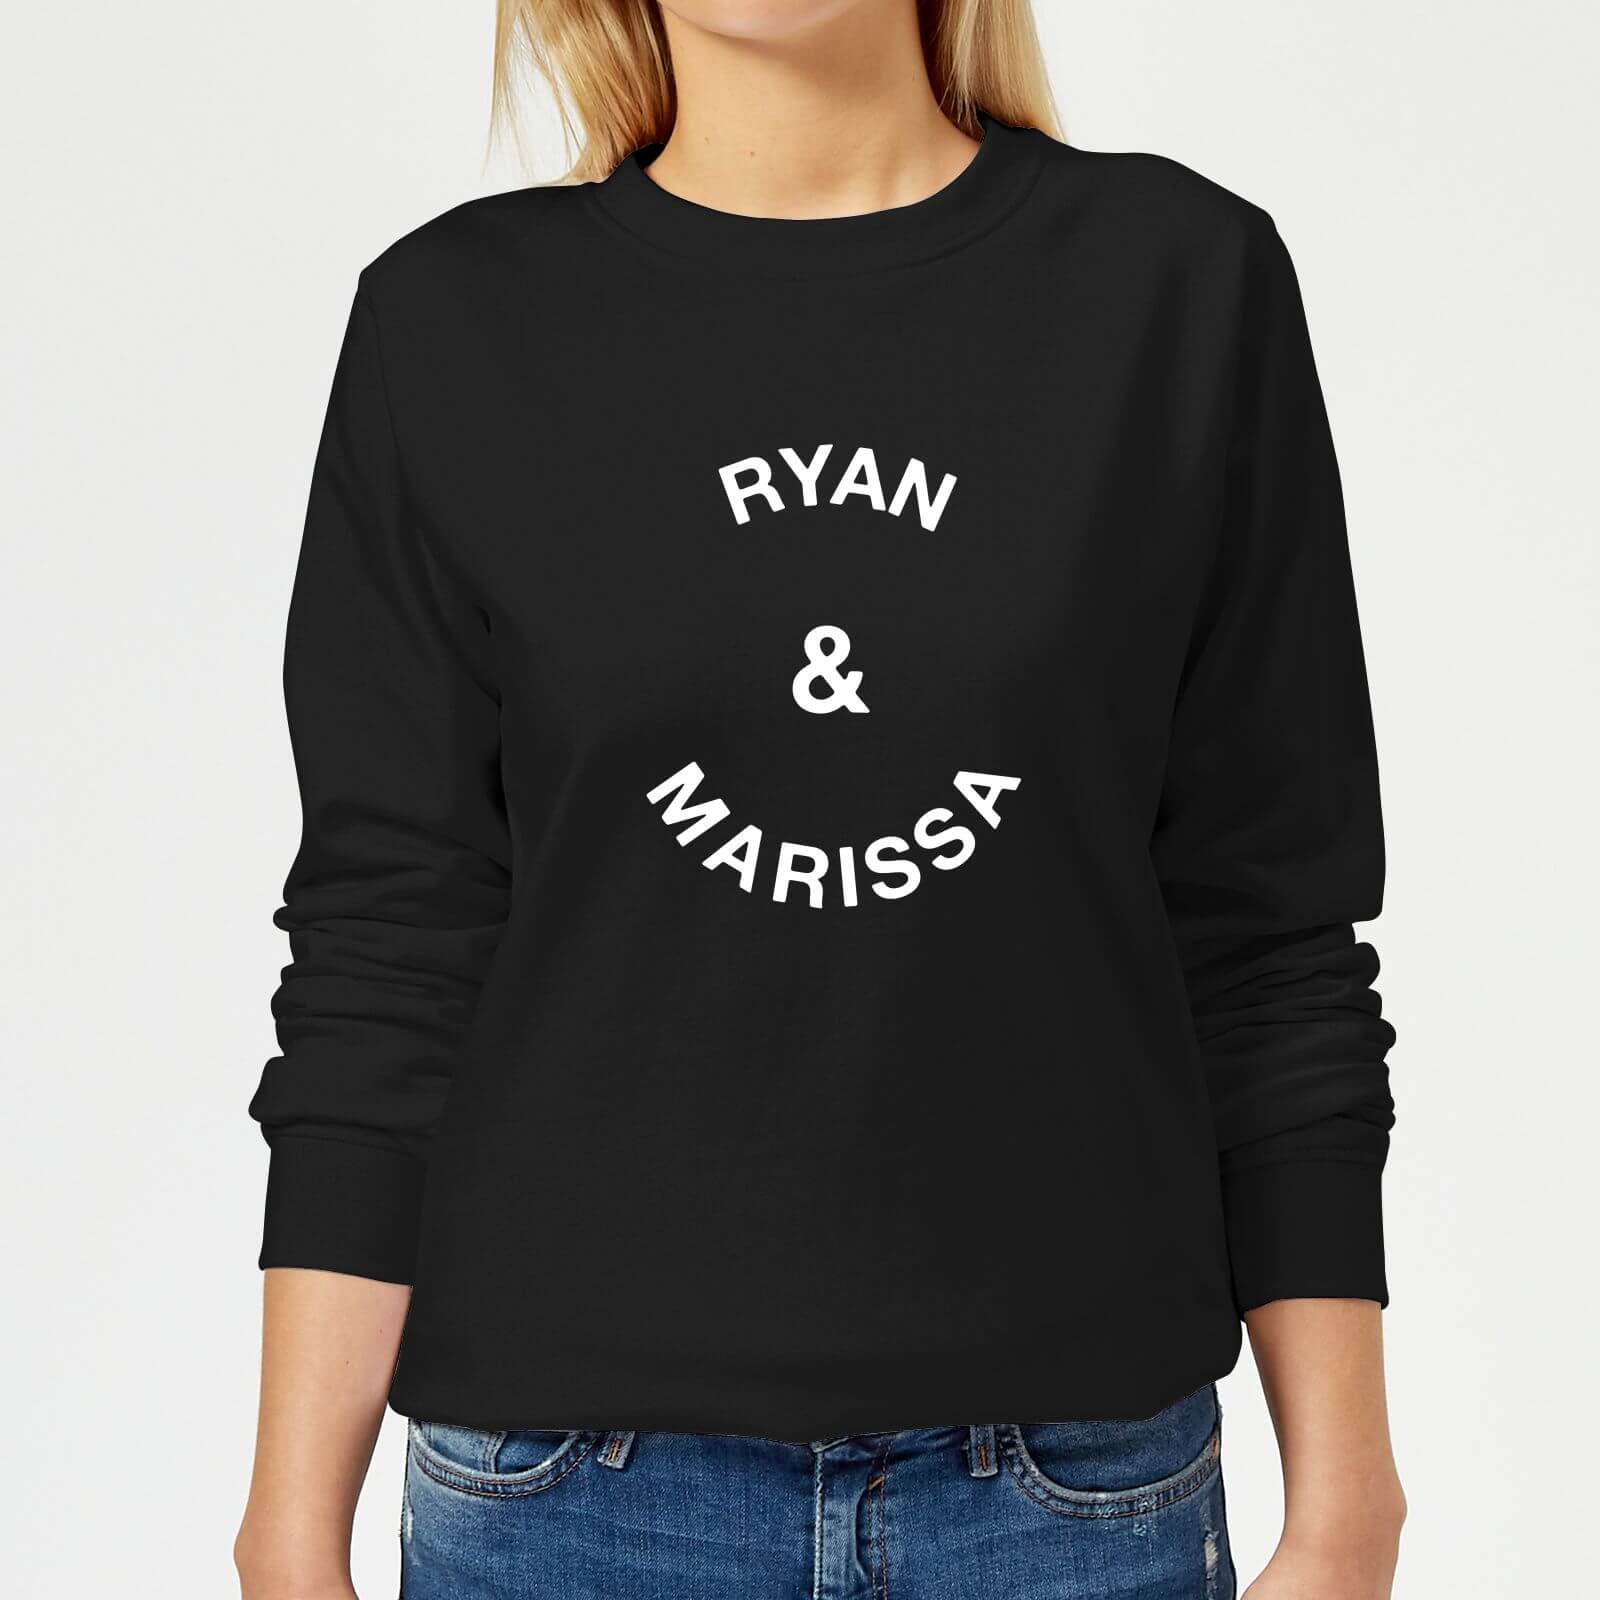 Ryan & Marissa Women's Sweatshirt - Black - S - Black